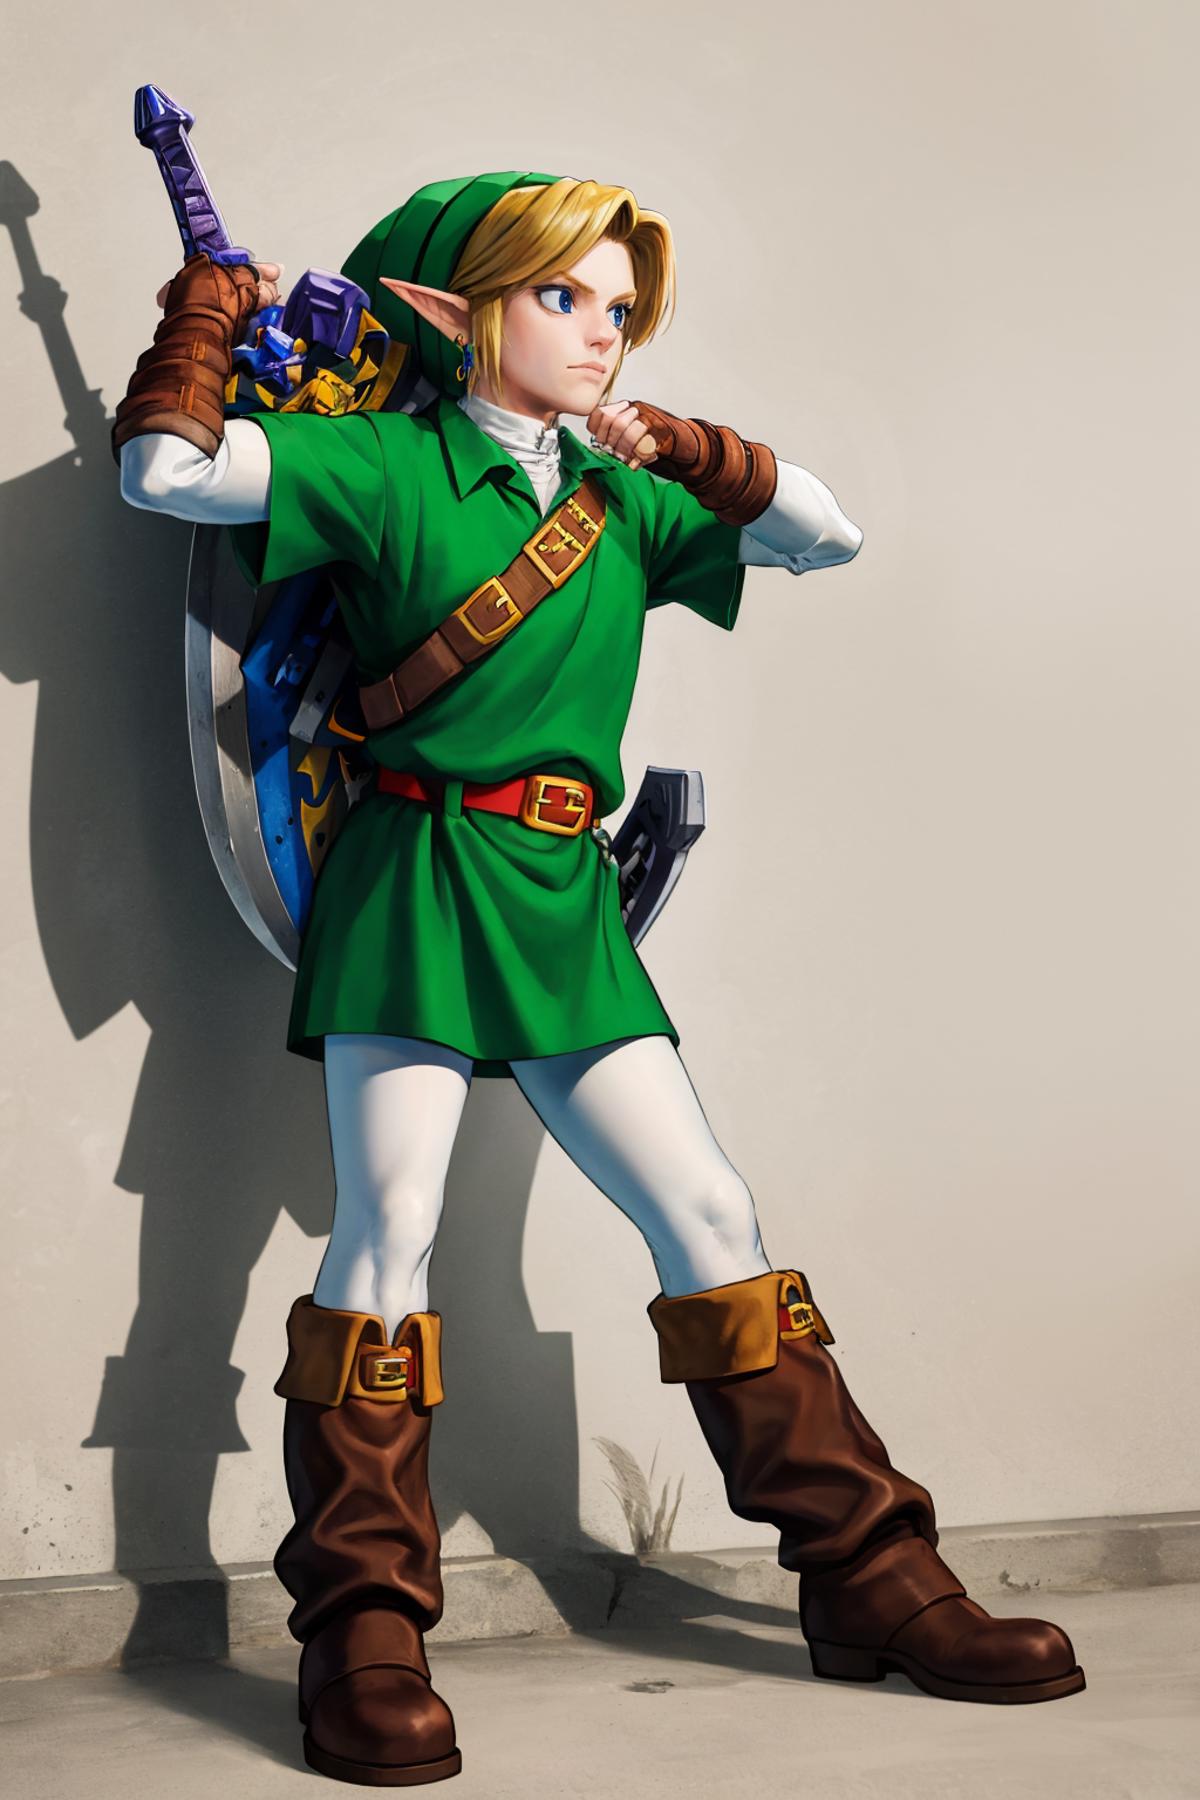 Link (The Legend of Zelda: Ocarina of Time) LoRA image by richyrich515